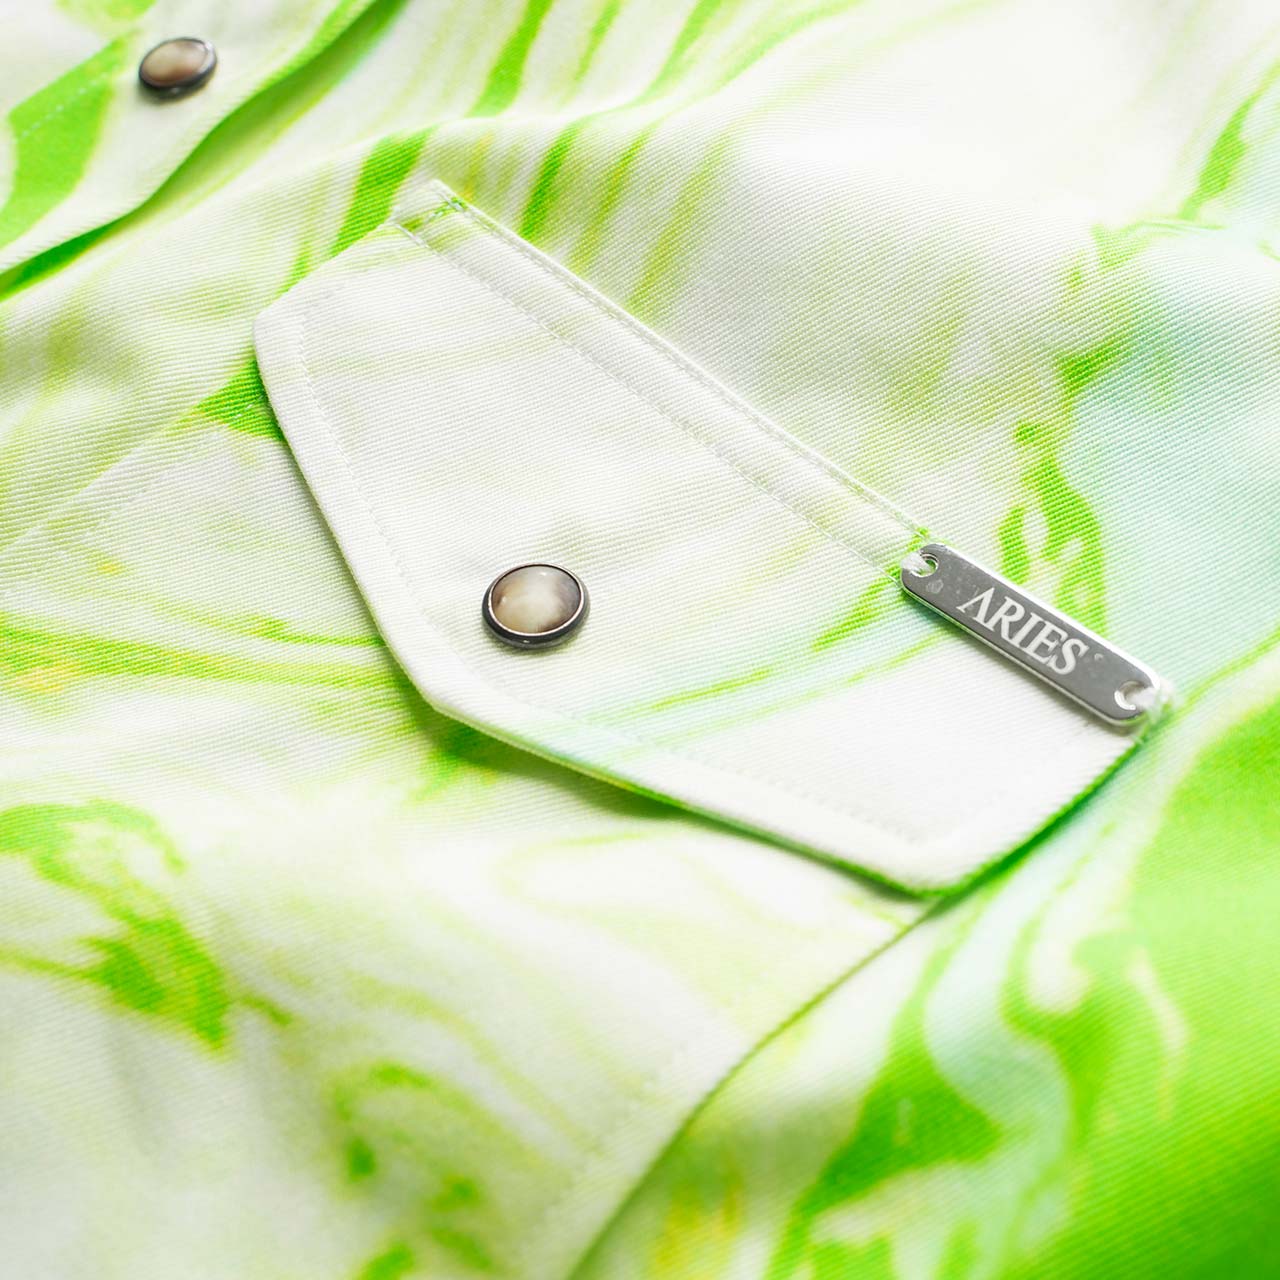 aries marble western shirt (green) - frar40501 - a.plus - Image - 3